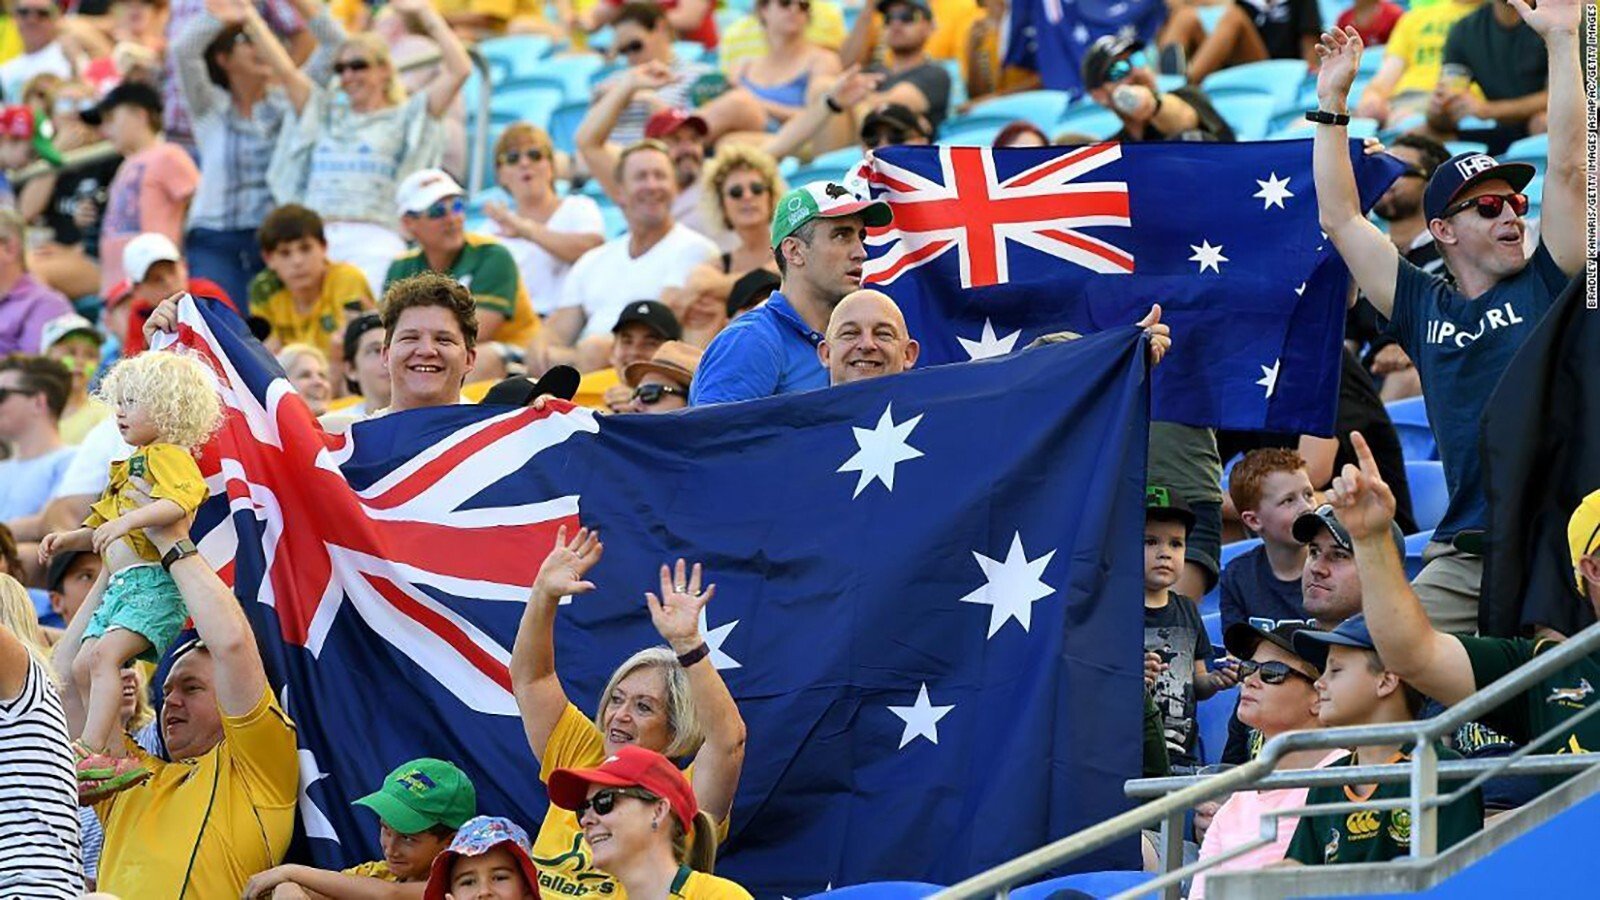 Australia fans at a Rugby Sevens match in Hong Kong. Photo: CNN